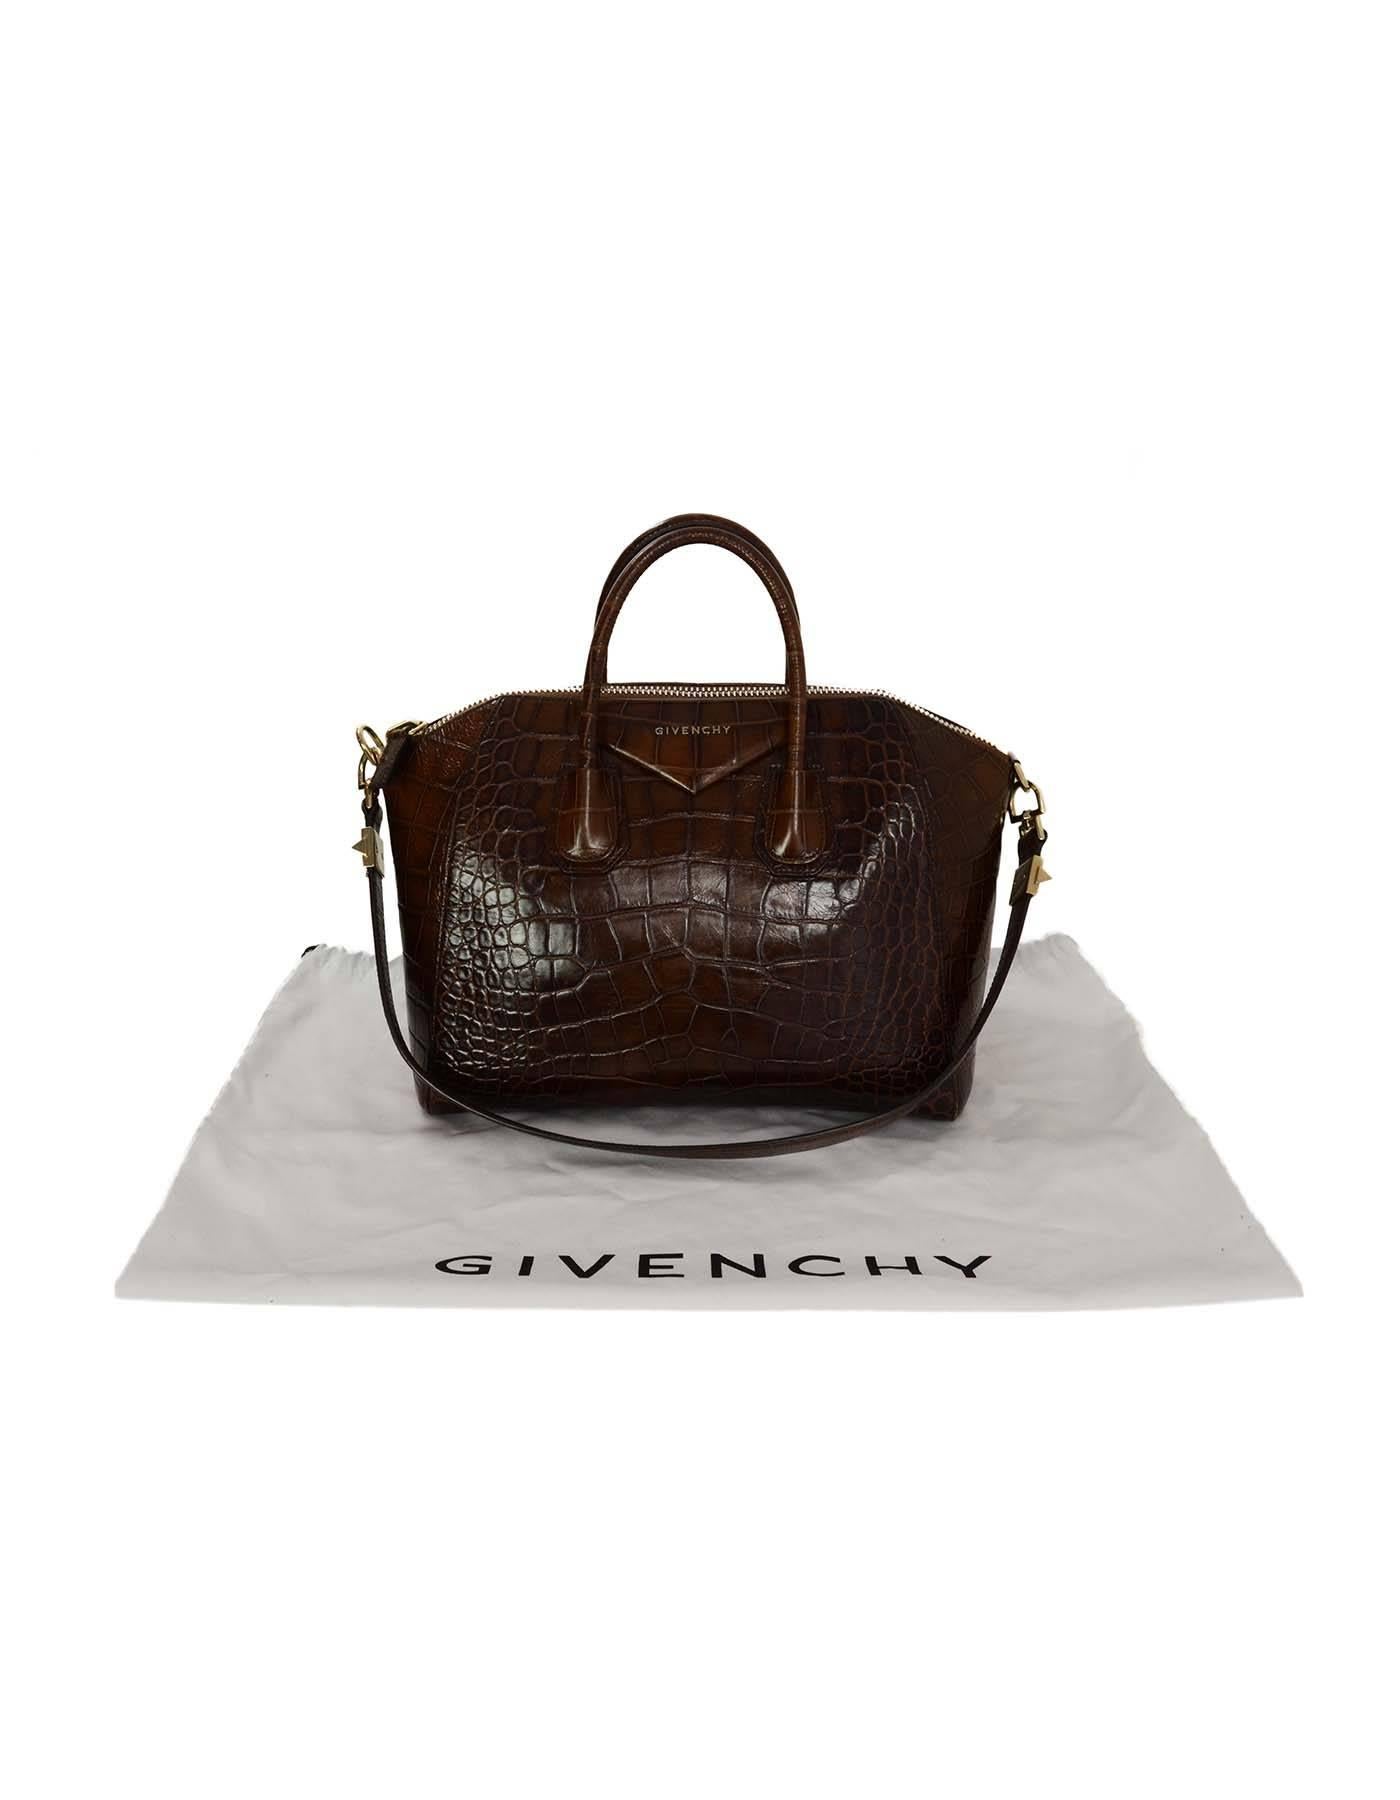 Givenchy Brown Croc Embossed Medium Antigona Bag GHW 2